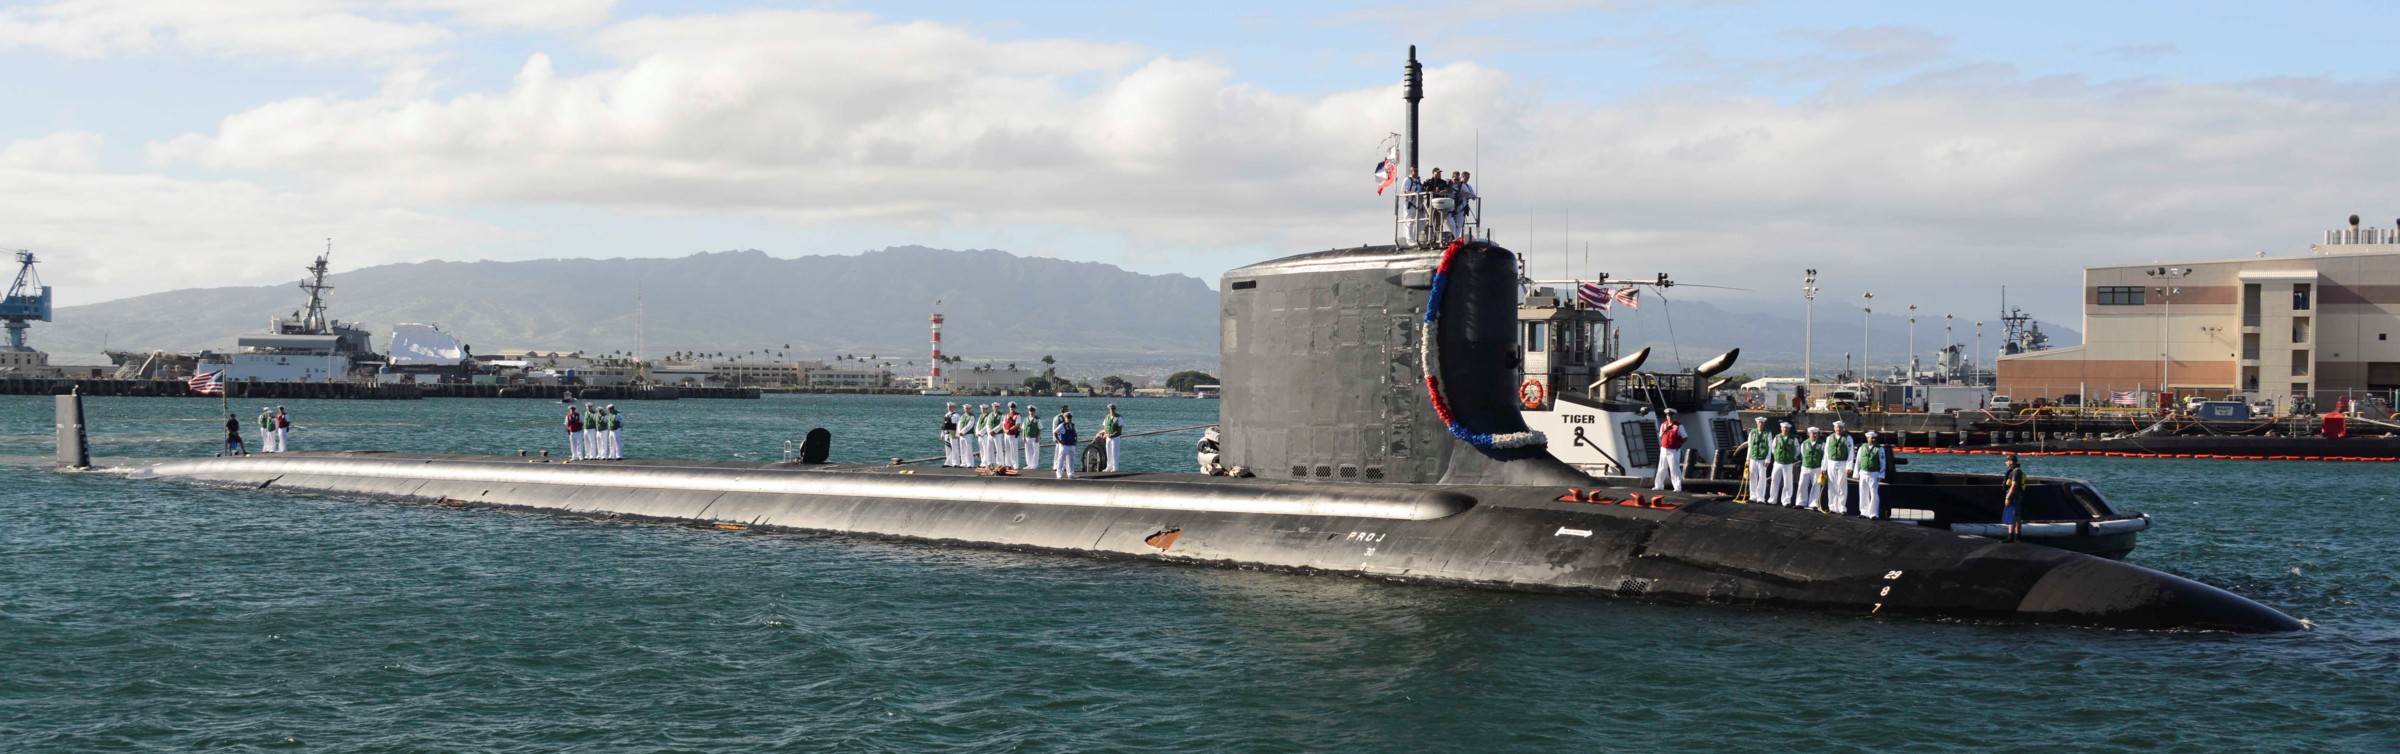 ssn-782 uss mississippi virginia class attack submarine us navy 10 homeport pearl harbor hickam